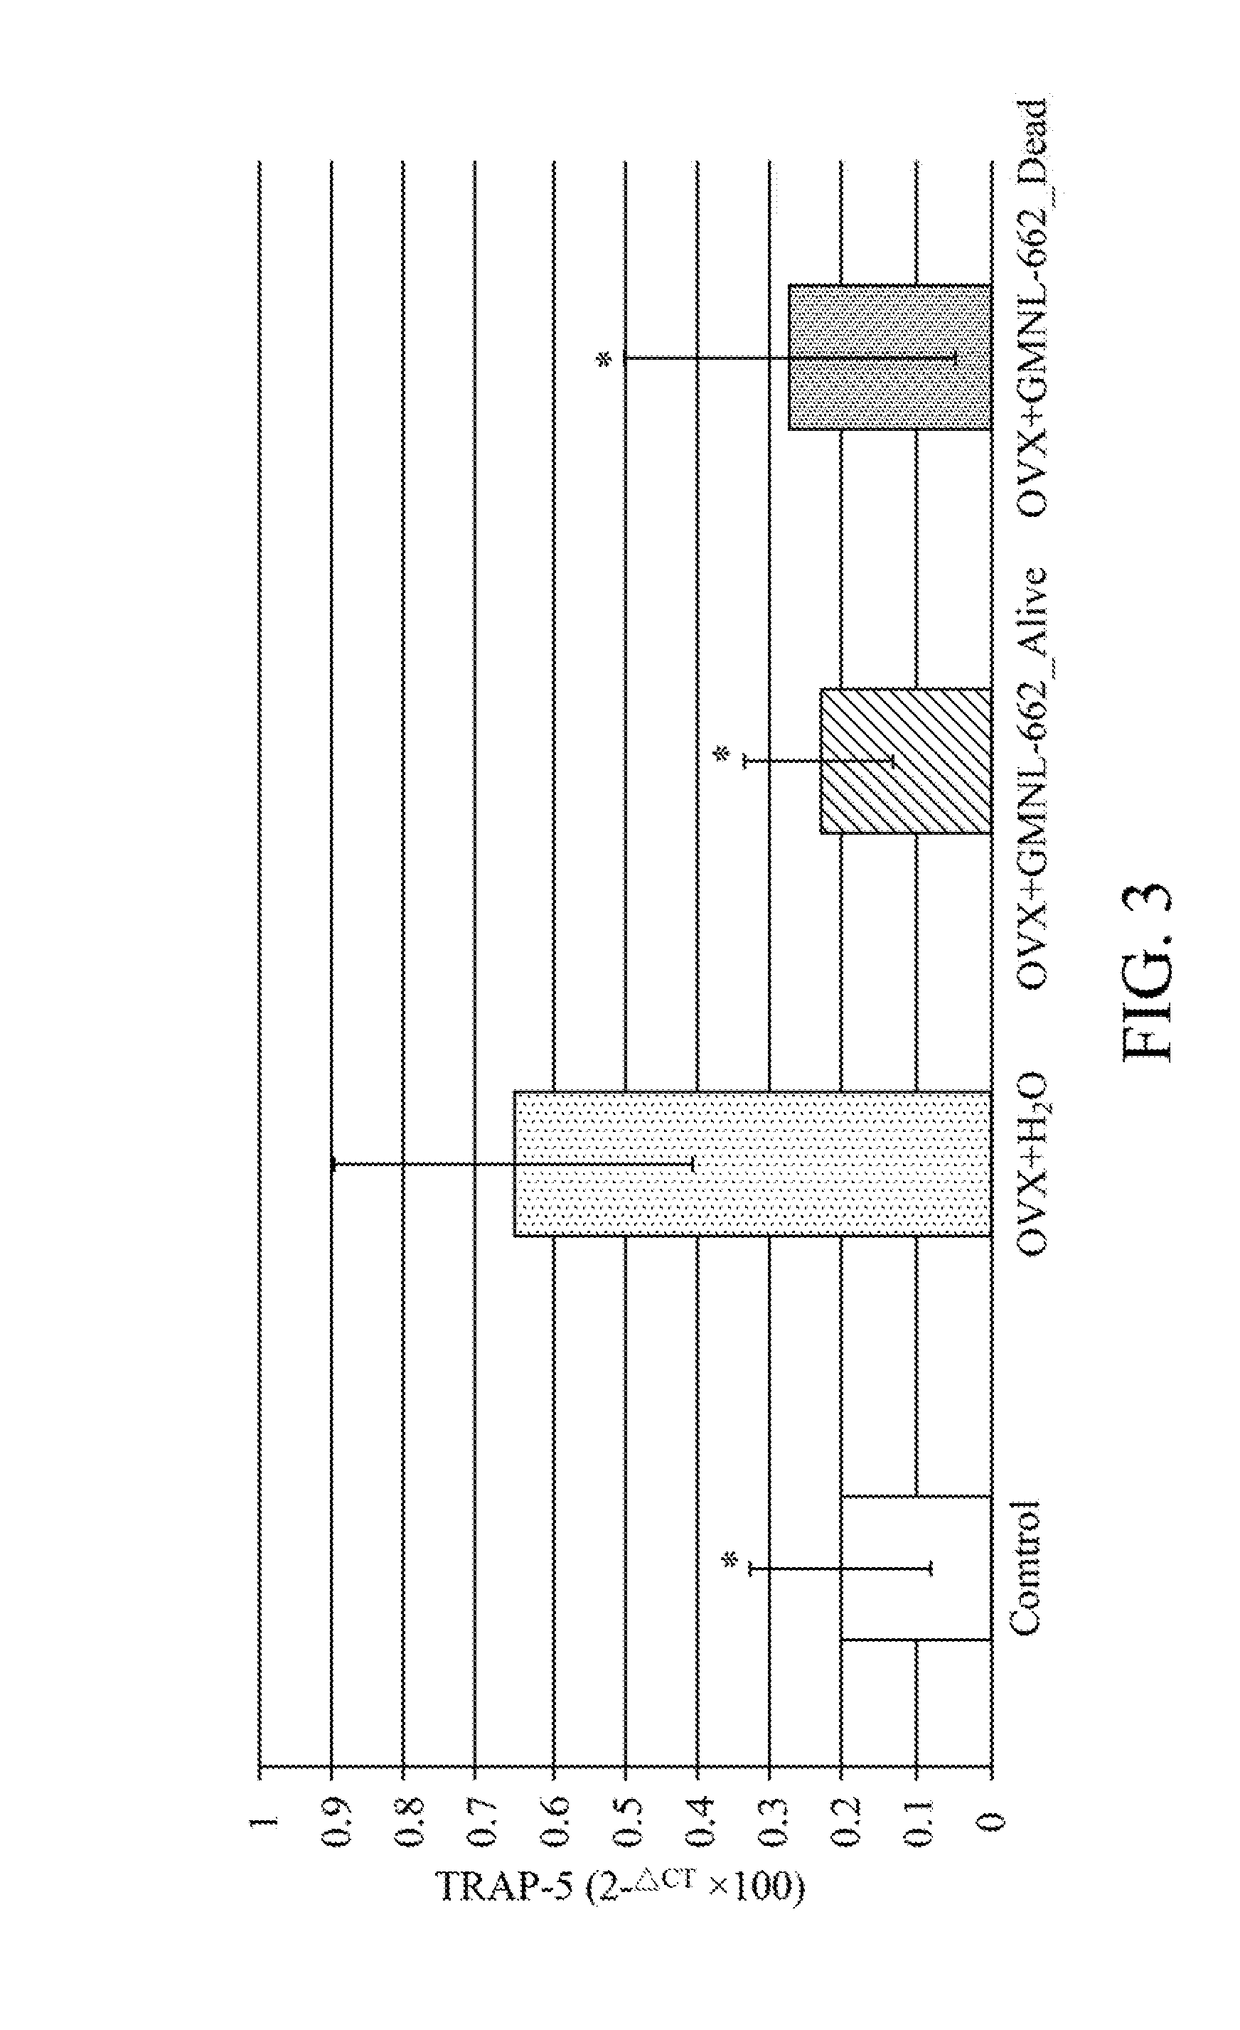 Composition having lactobacillus plantarum strain gmnl-662 for promoting bone regrowth